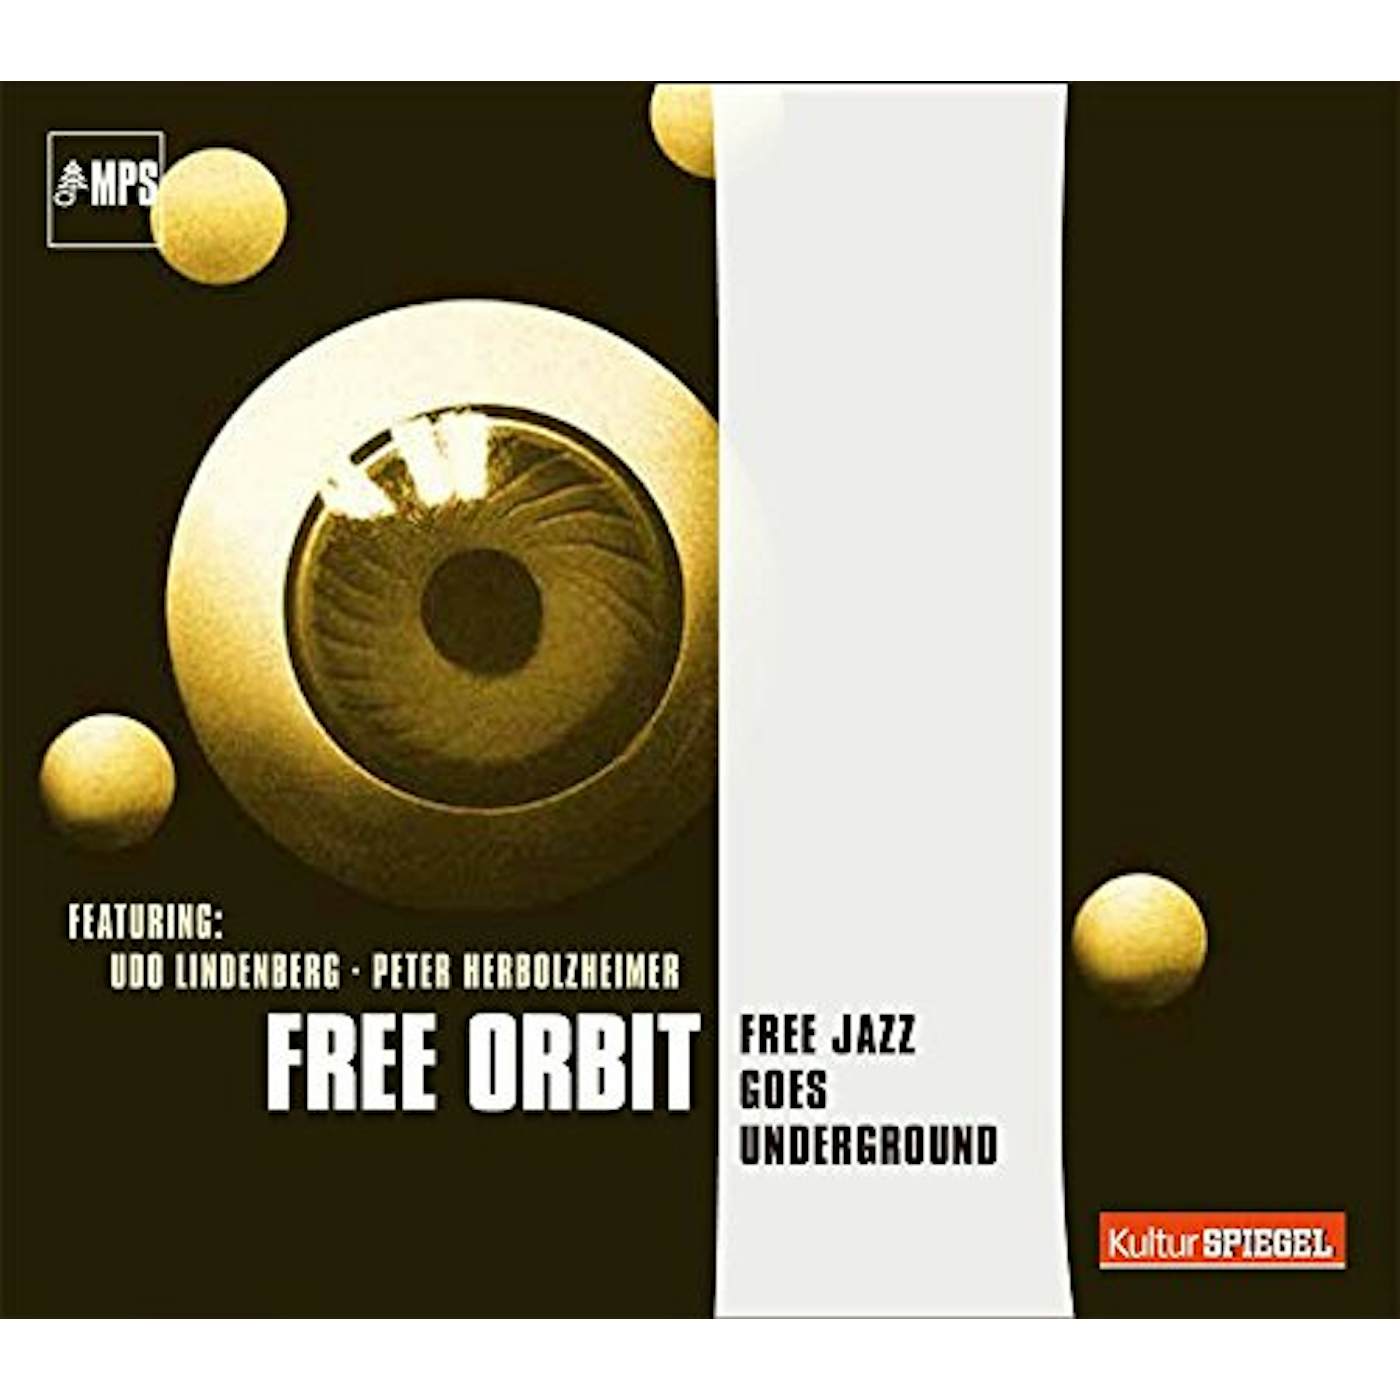 Free Orbit FREE JAZZ GOES UNDERGROUND CD